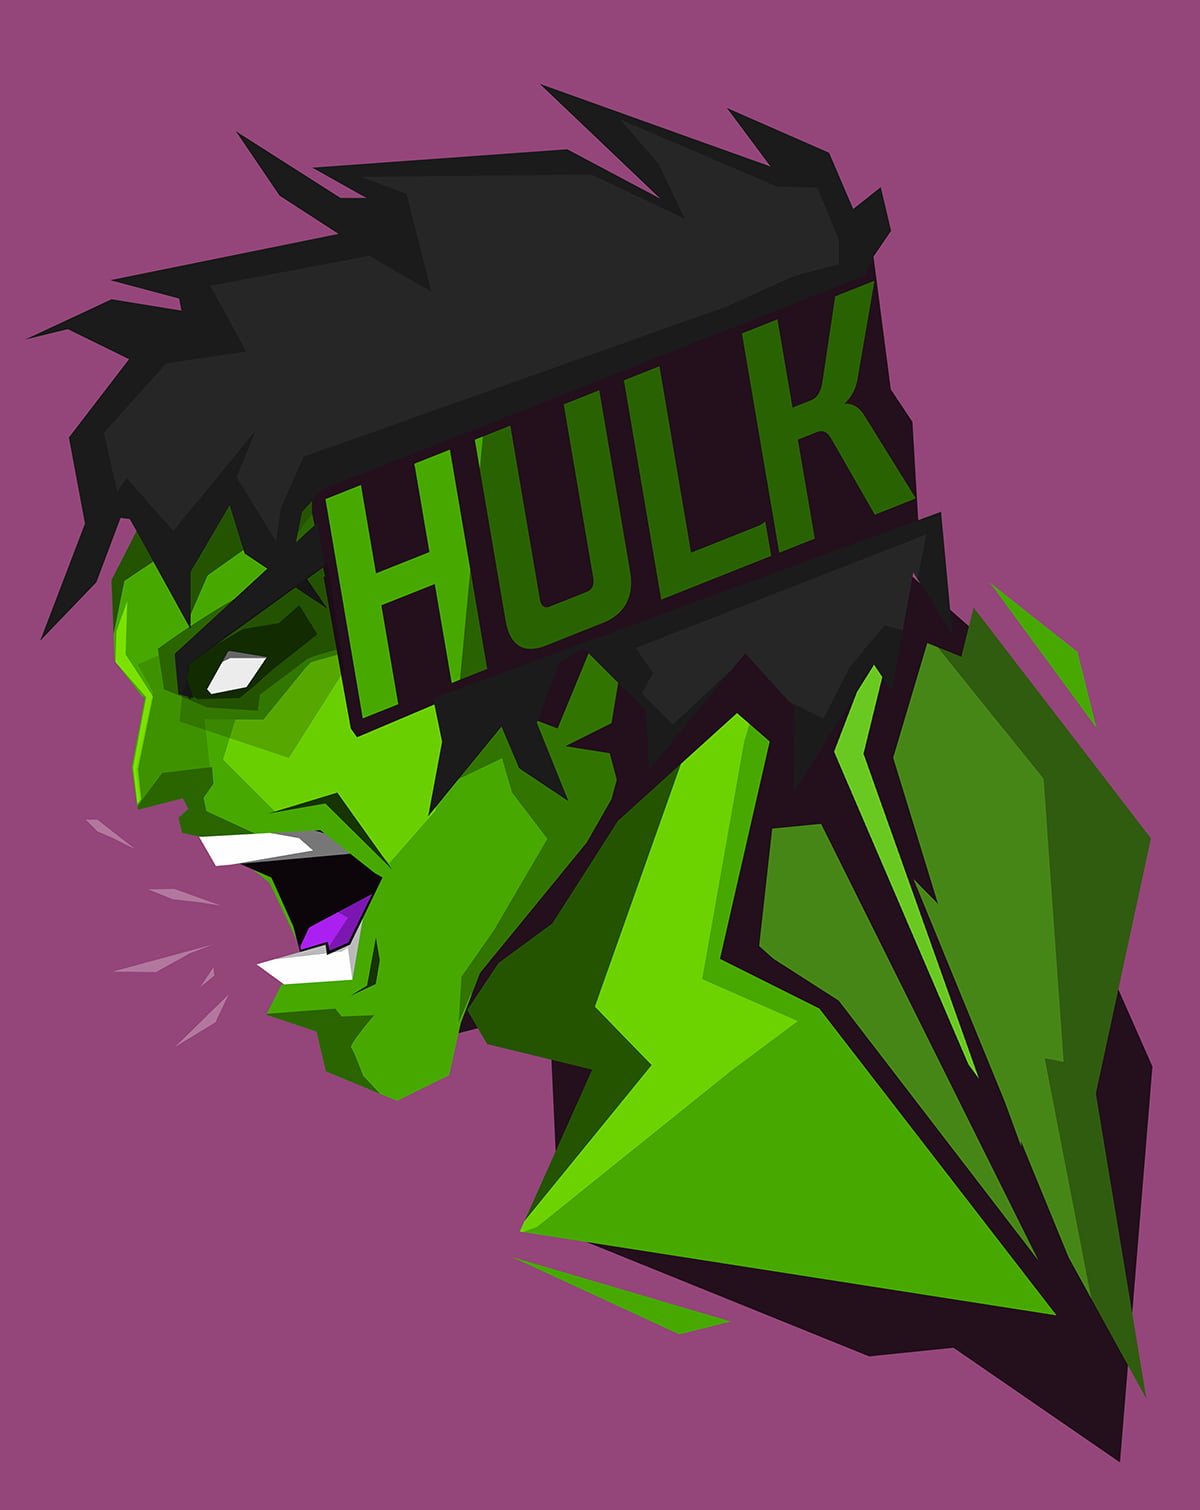 hulk wallpaper,fictional character,graphic design,superhero,illustration